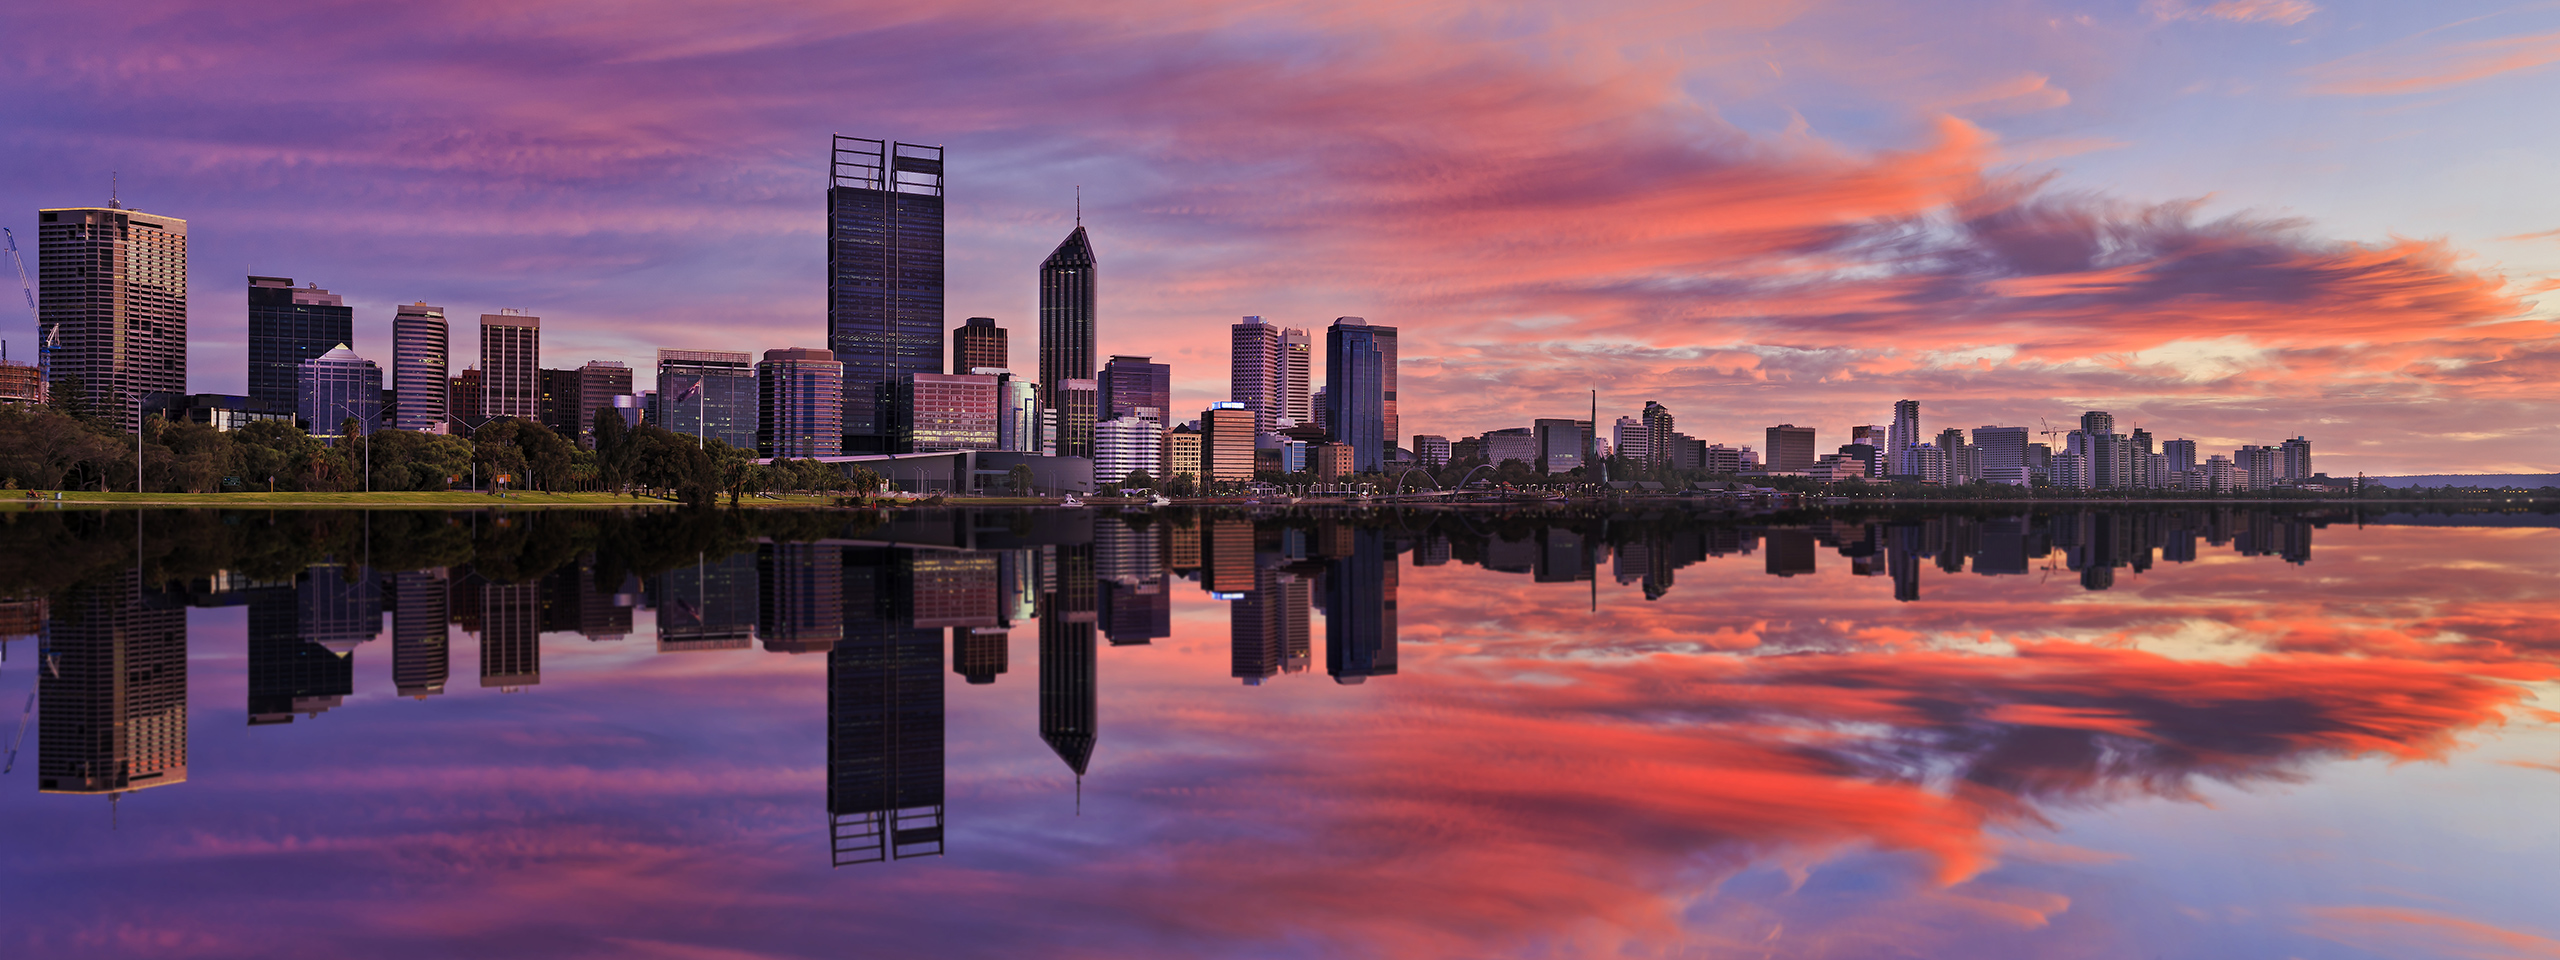 Perth at sunset